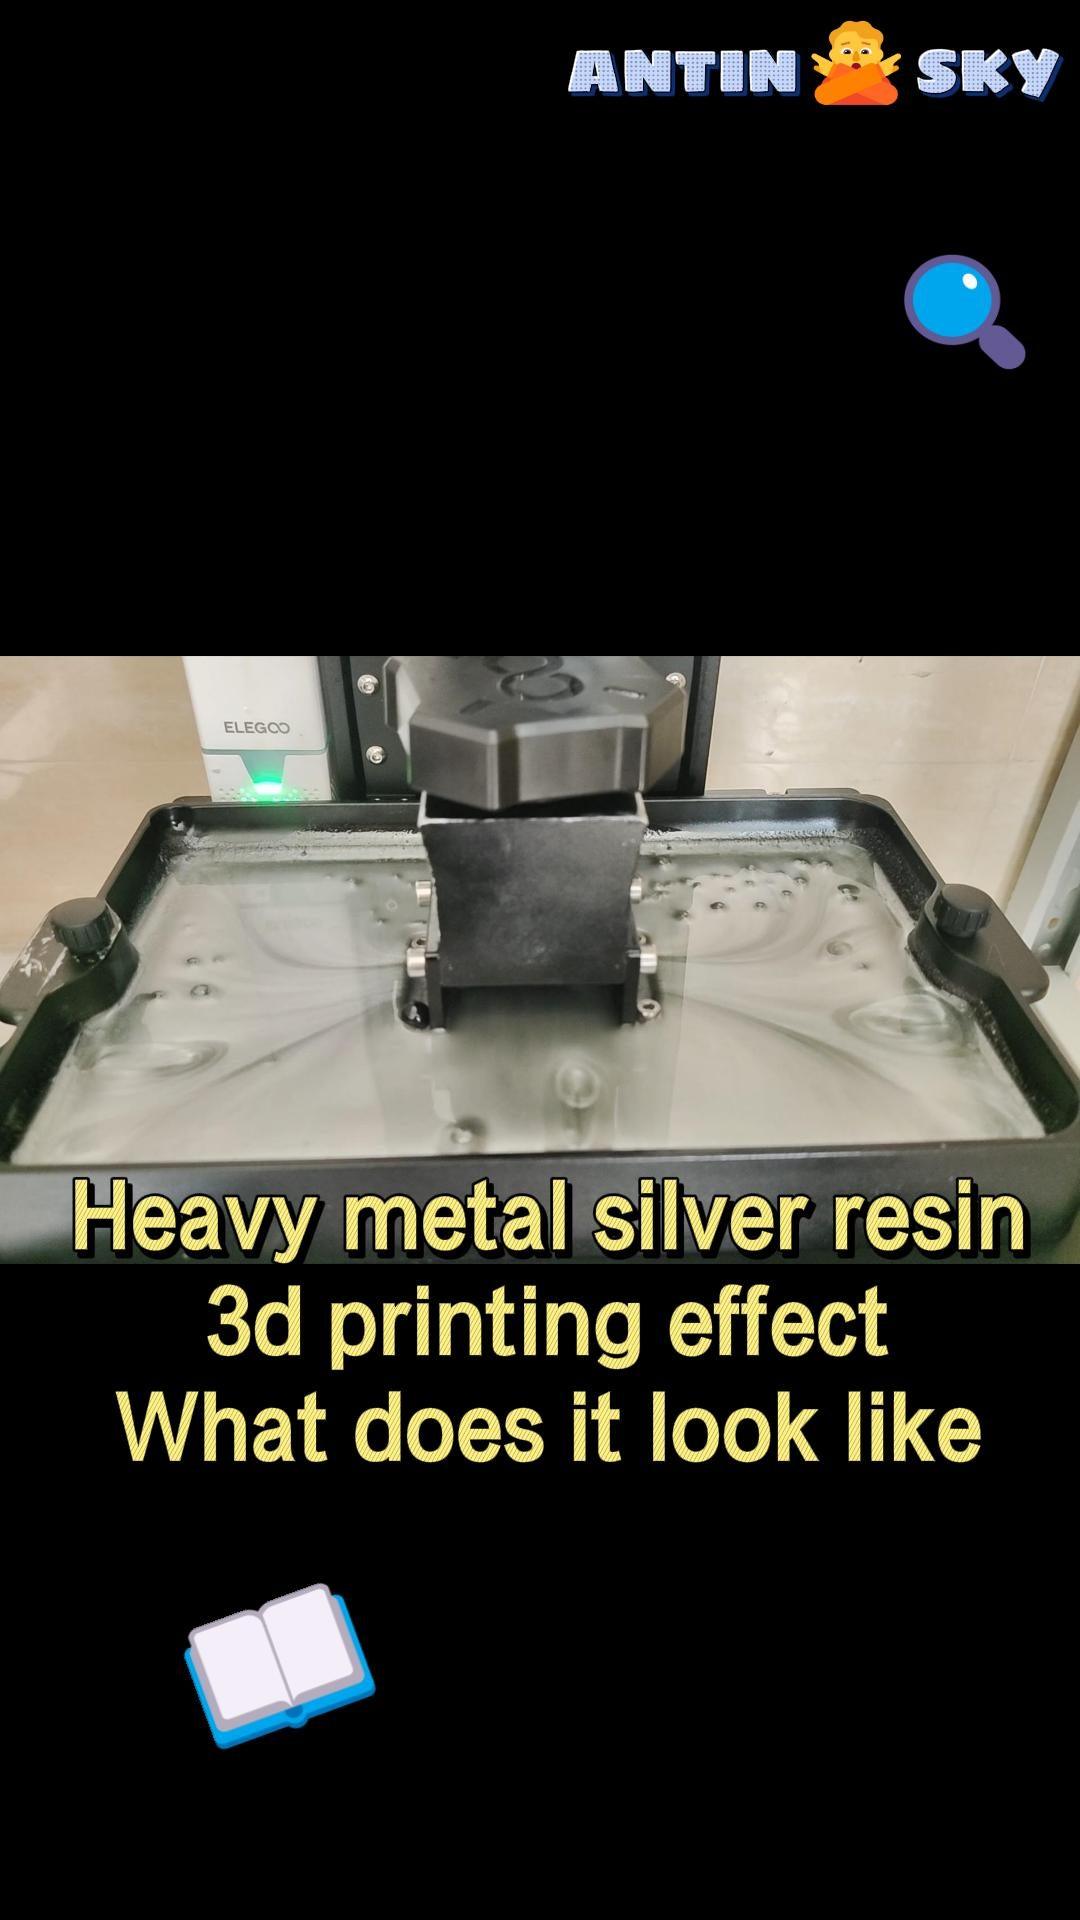 Antinsky production of heavy metal silver resin - Antinsky3d